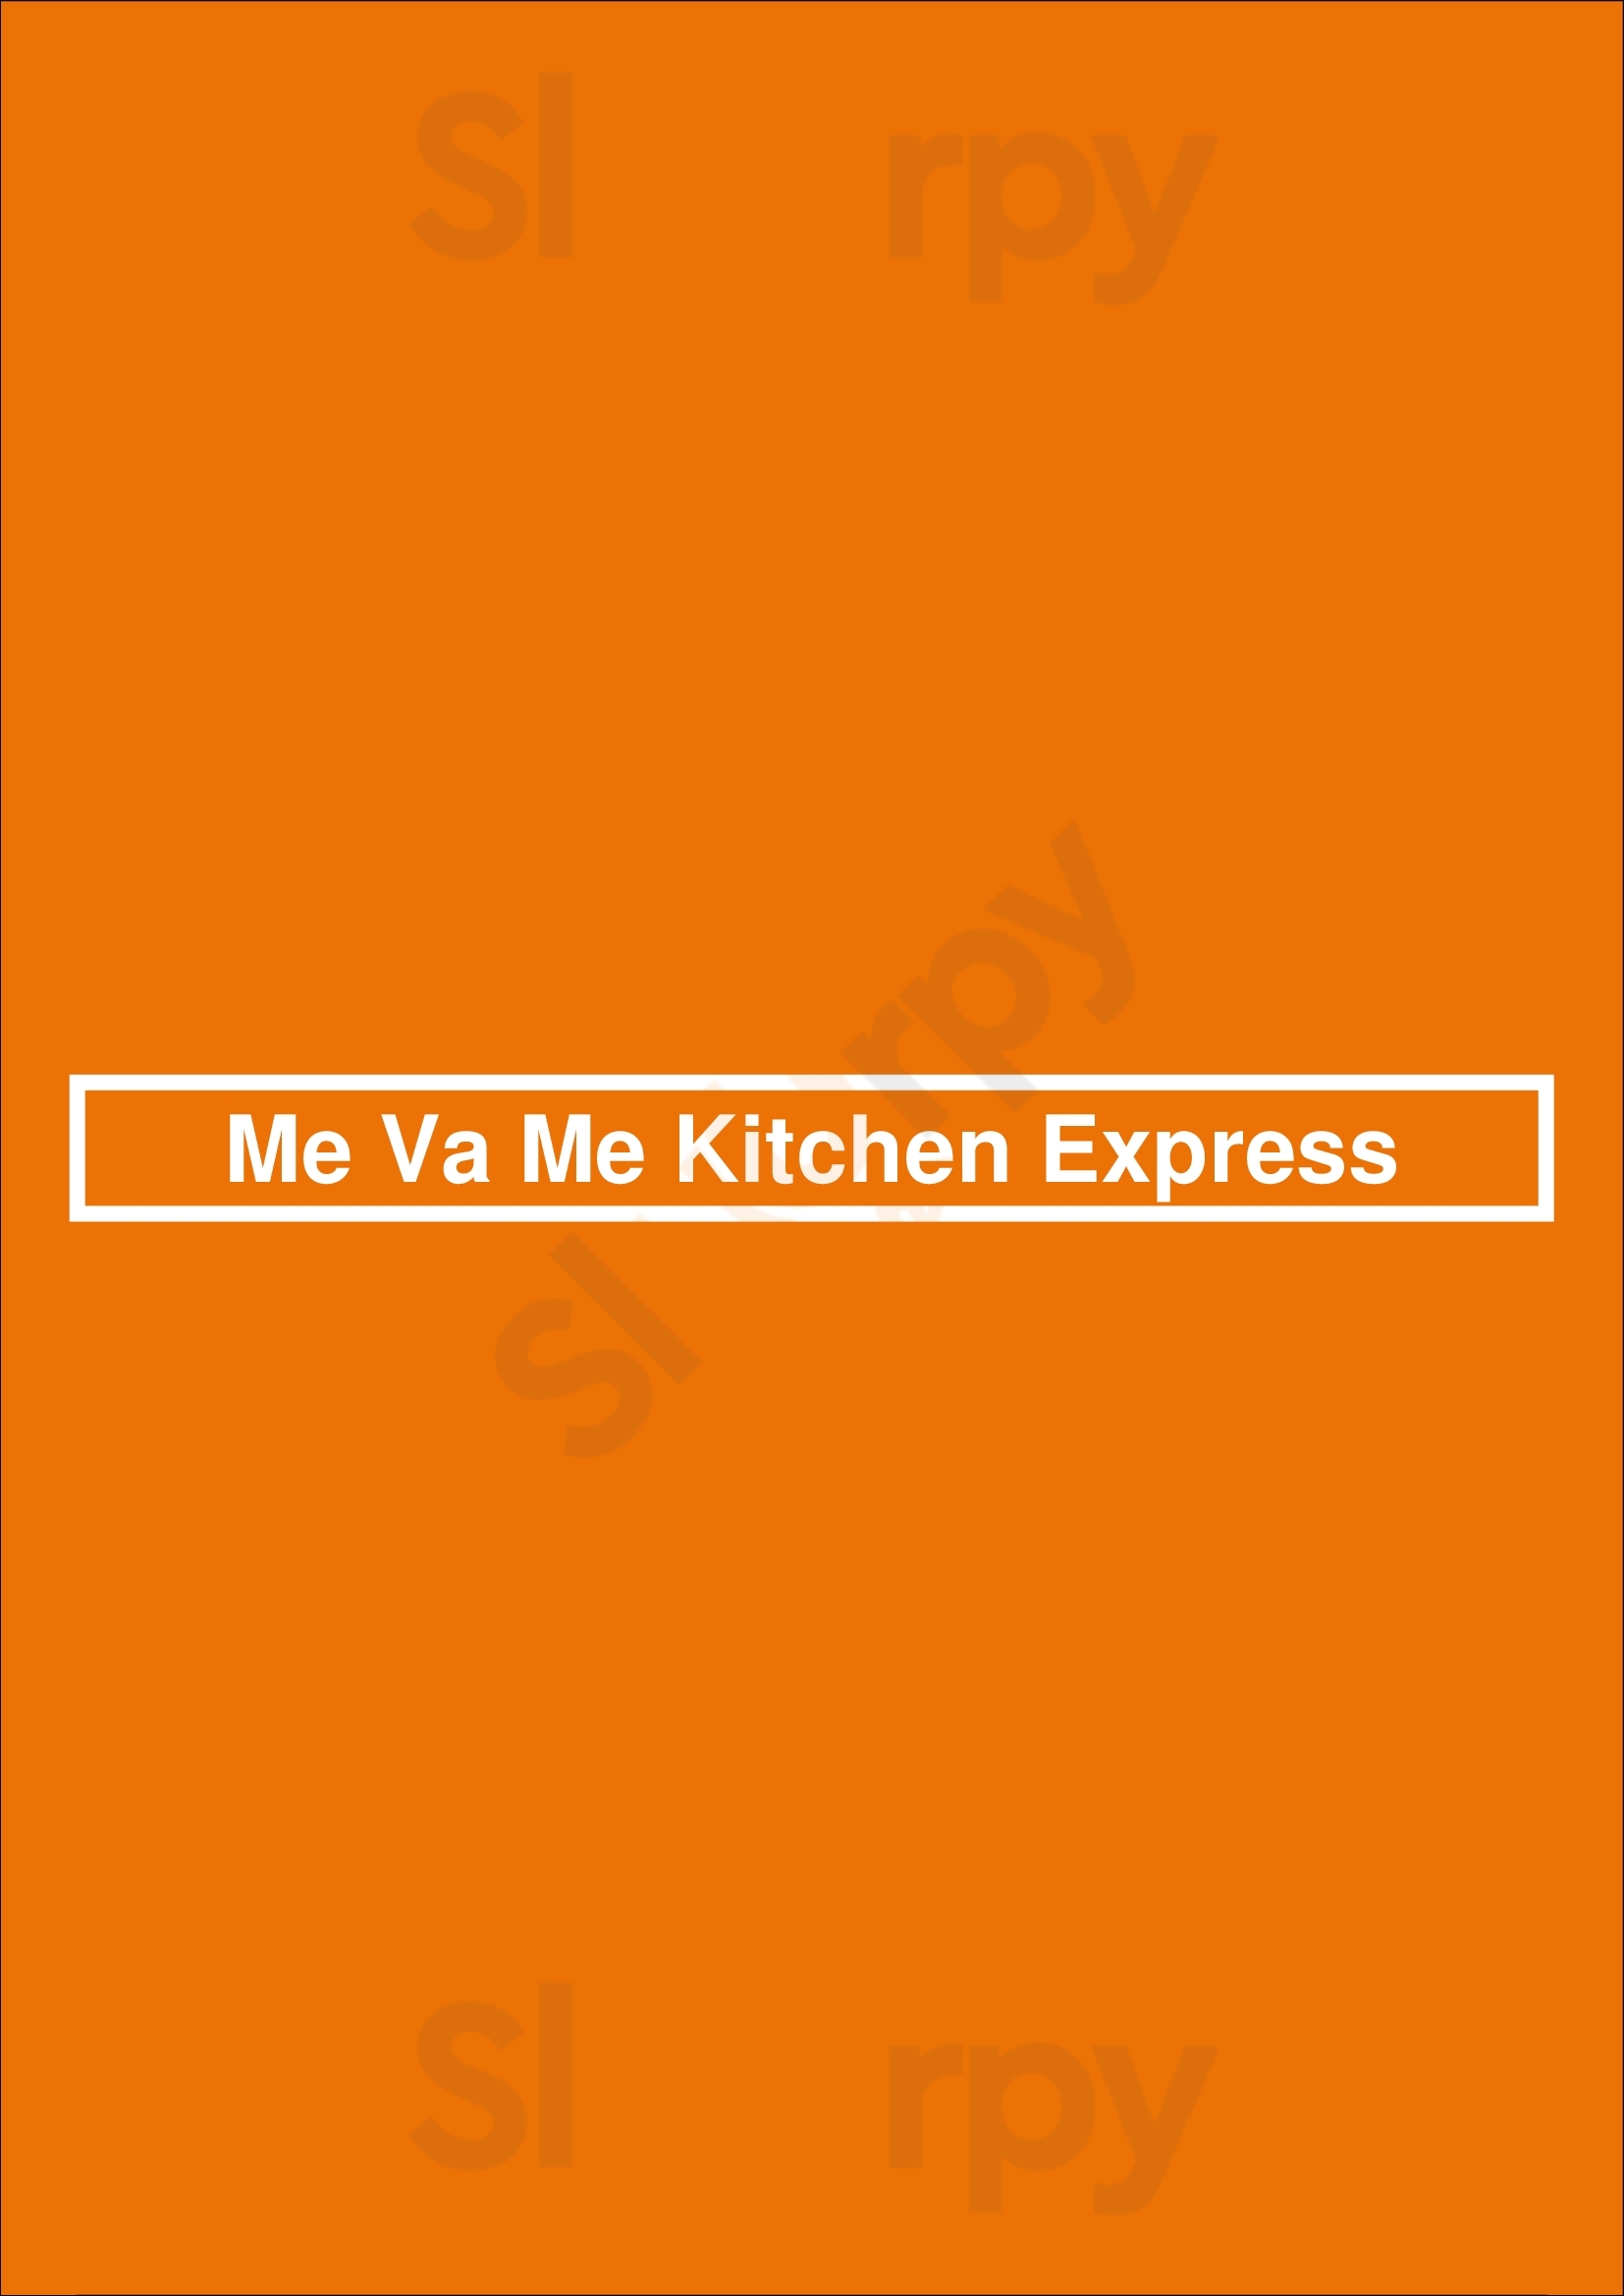 Me Va Me Kitchen Express Toronto Menu - 1